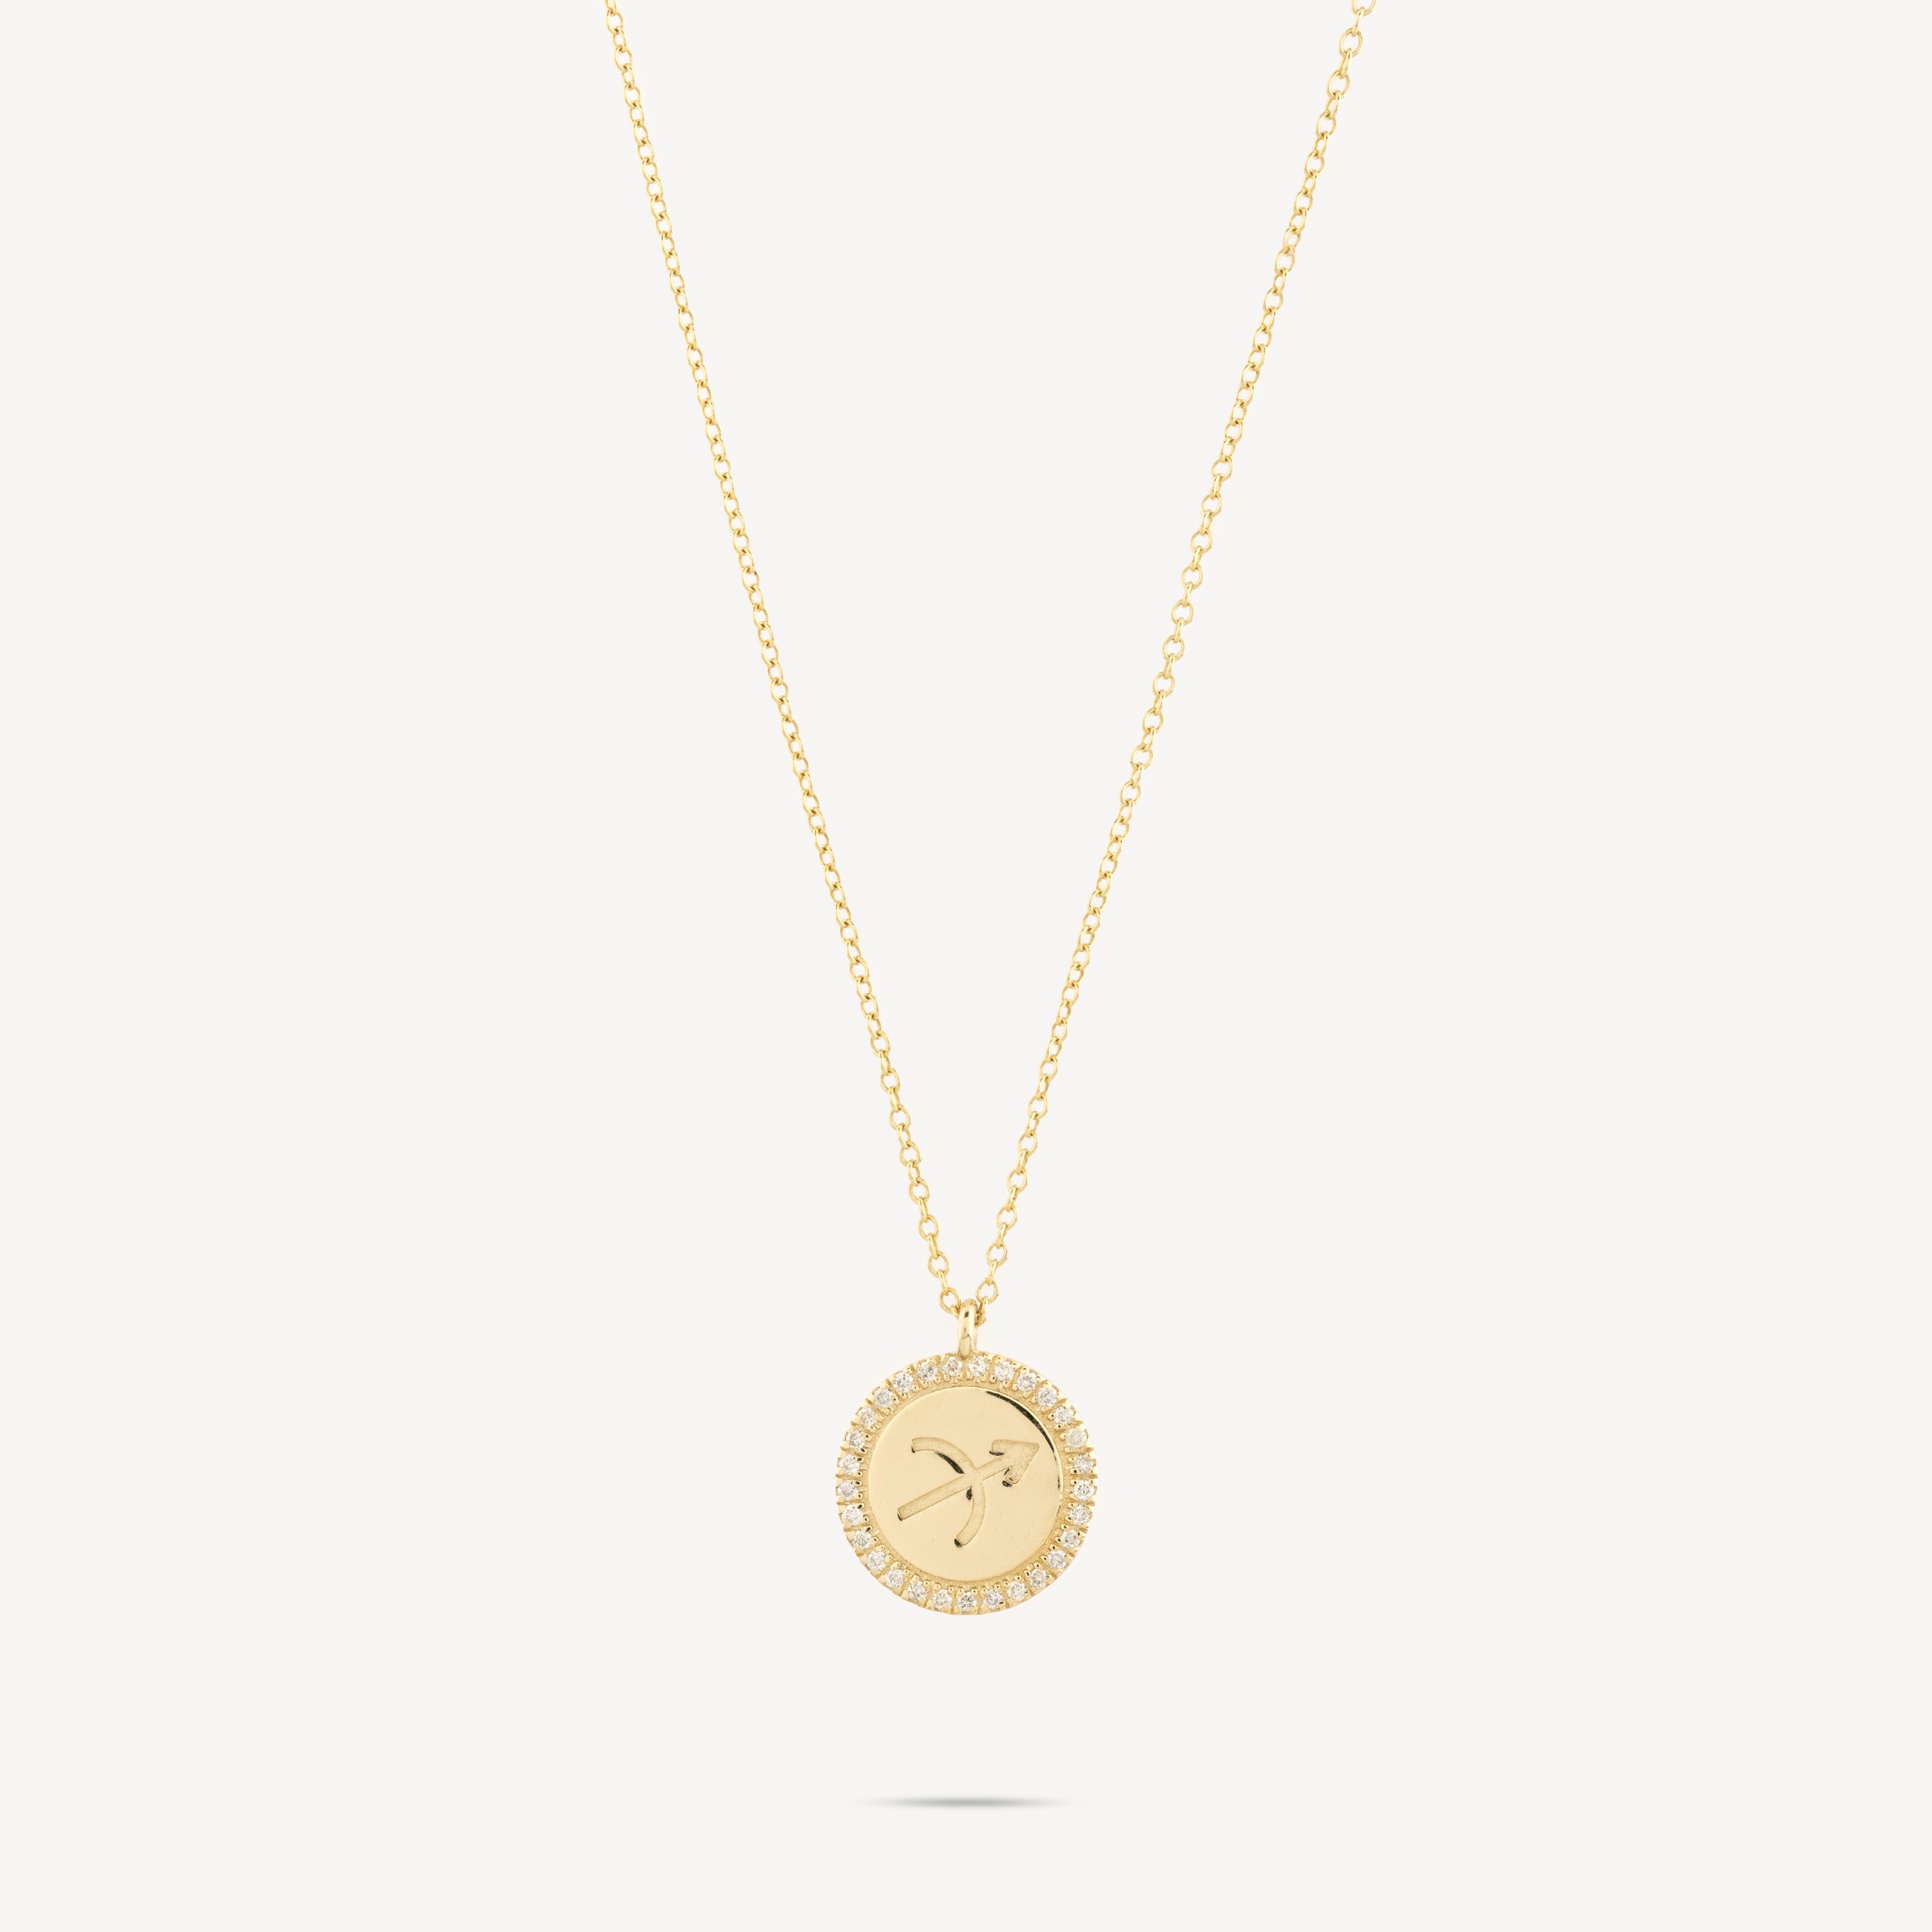 Zodiac Sagittarius medallion necklace with diamonds